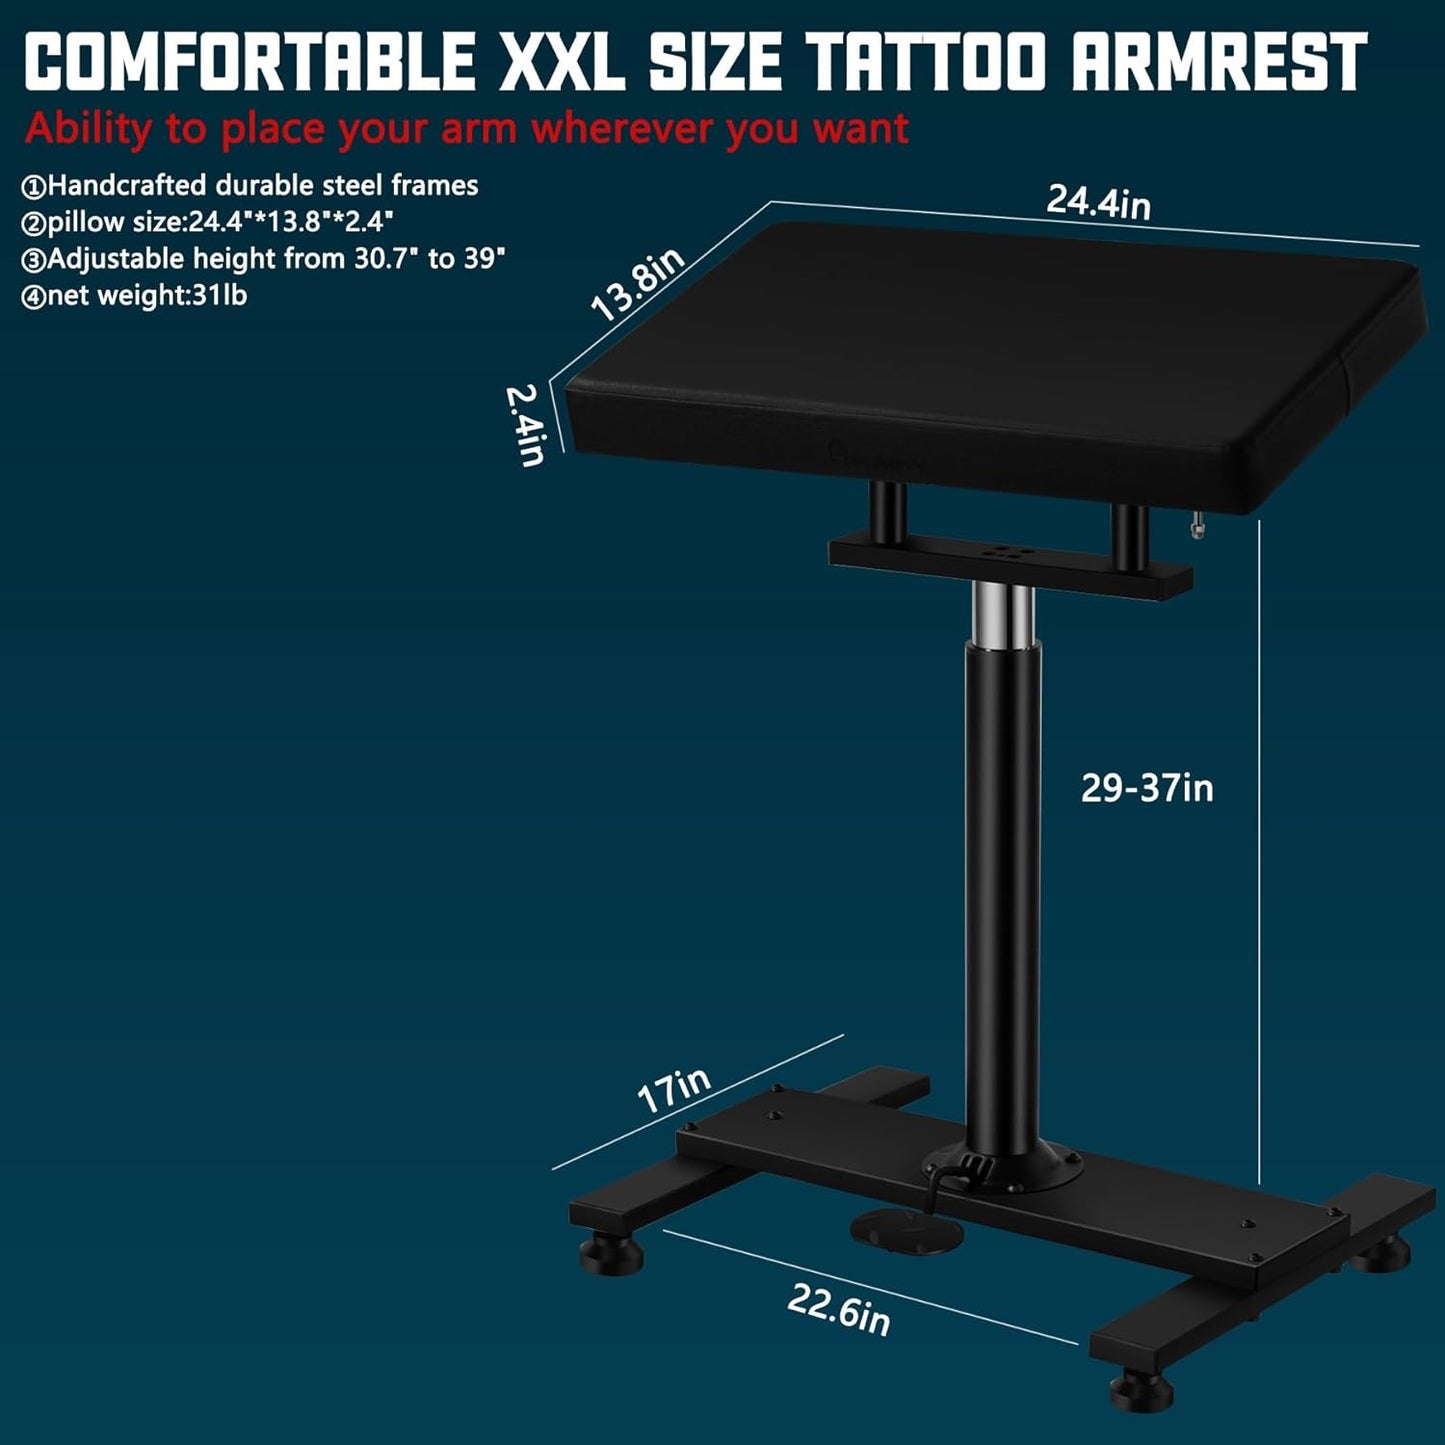 XXL Tattoo Arm Rest Adjustable Height by Hydraulic for Tattoo Studio